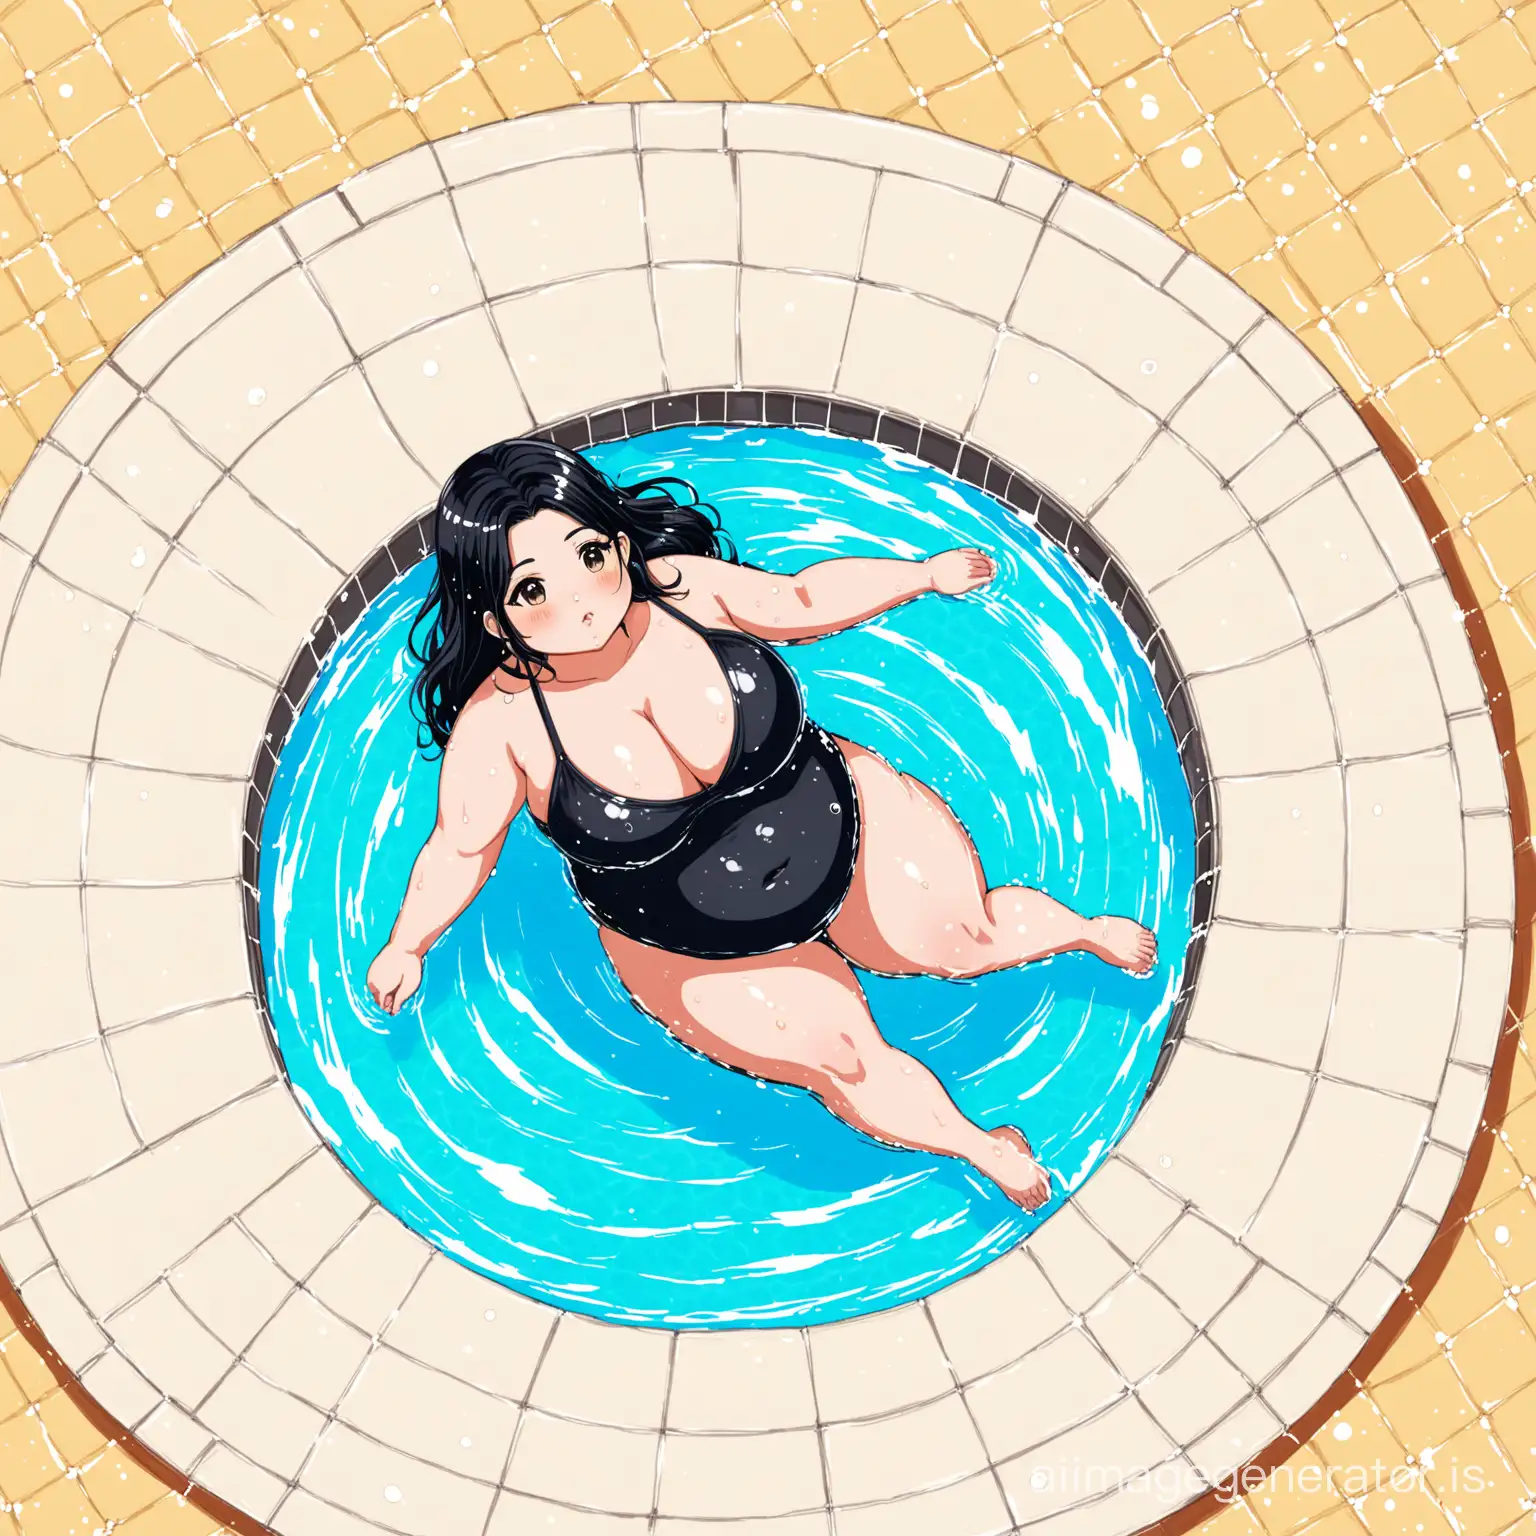 chubby Bengali woman, wet black hair, josei anime style, swim, cleavage, water colour, swimming pool, full body, top view